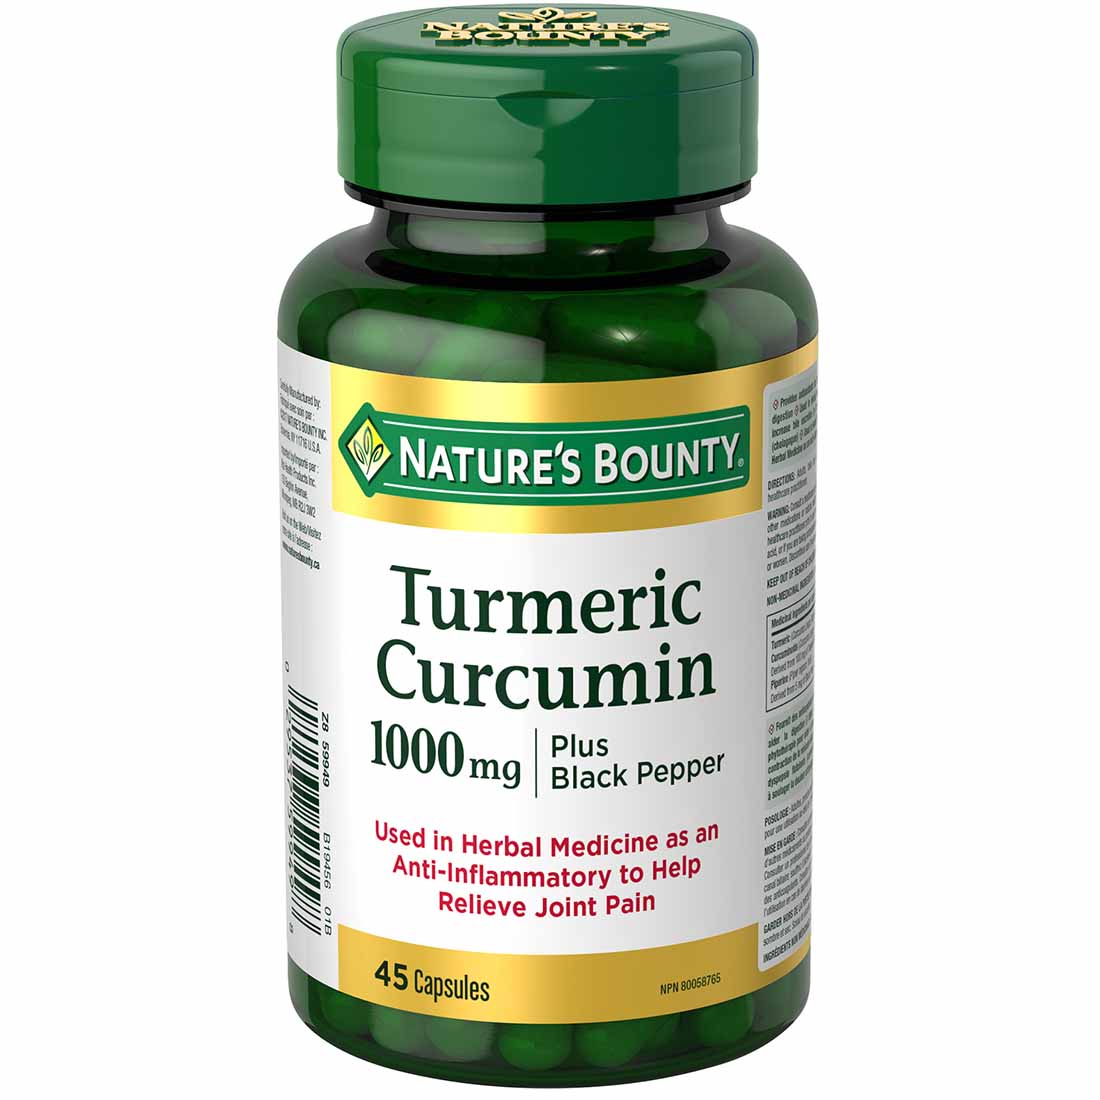 Nature's Bounty Turmeric Curcumin plus Black Pepper, 45 Capsules